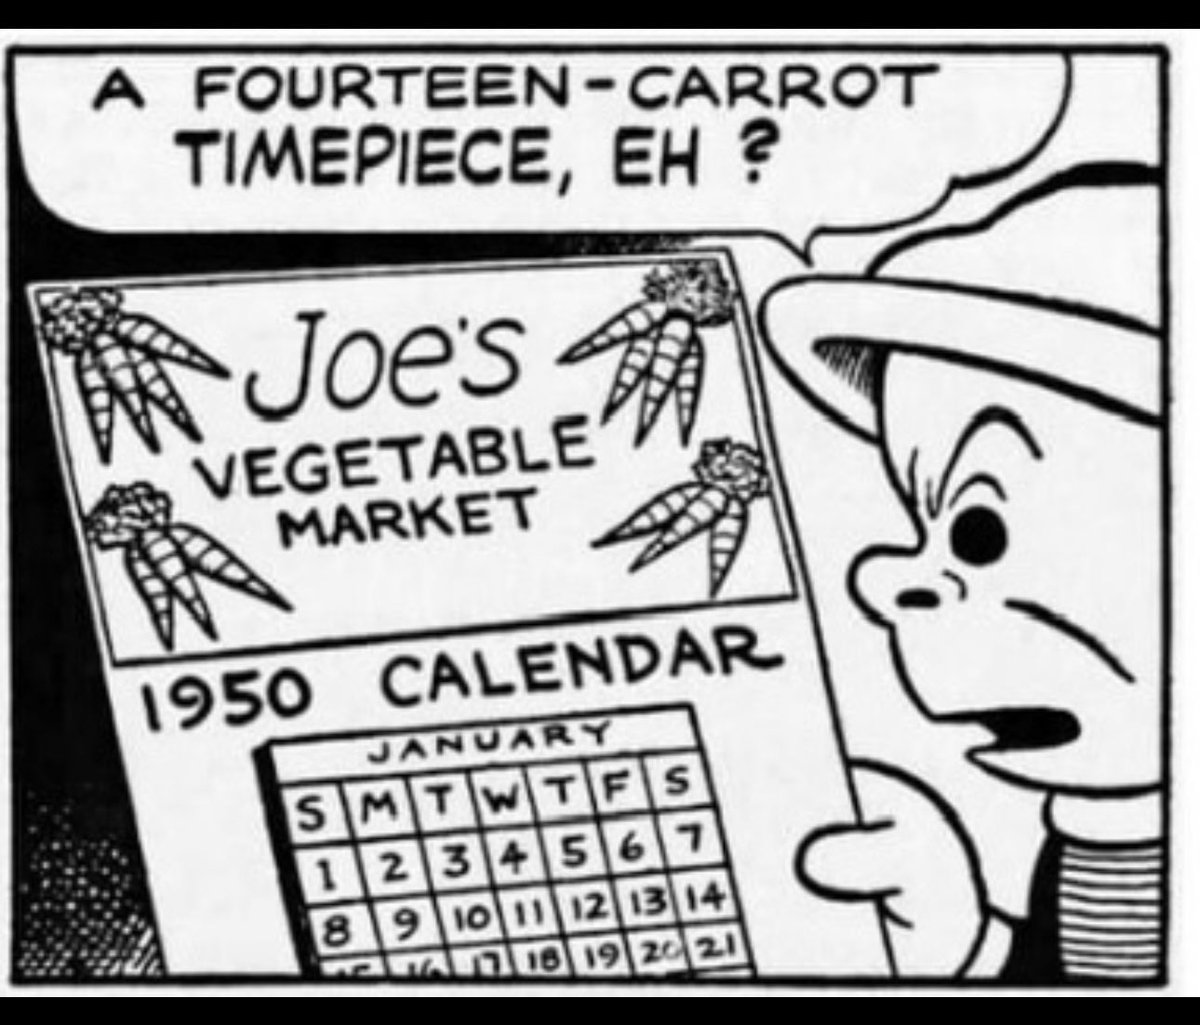 Sluggo’s Timepiece.
Published January 10, 1950.

Would’ve preferred a daily Far Side calendar myself, but a gift’s a gift.

#nancy #nancycomics #erniebushmiller #nancyandsluggo #sluggo #sluggocomics #newyearcalendar #calendar